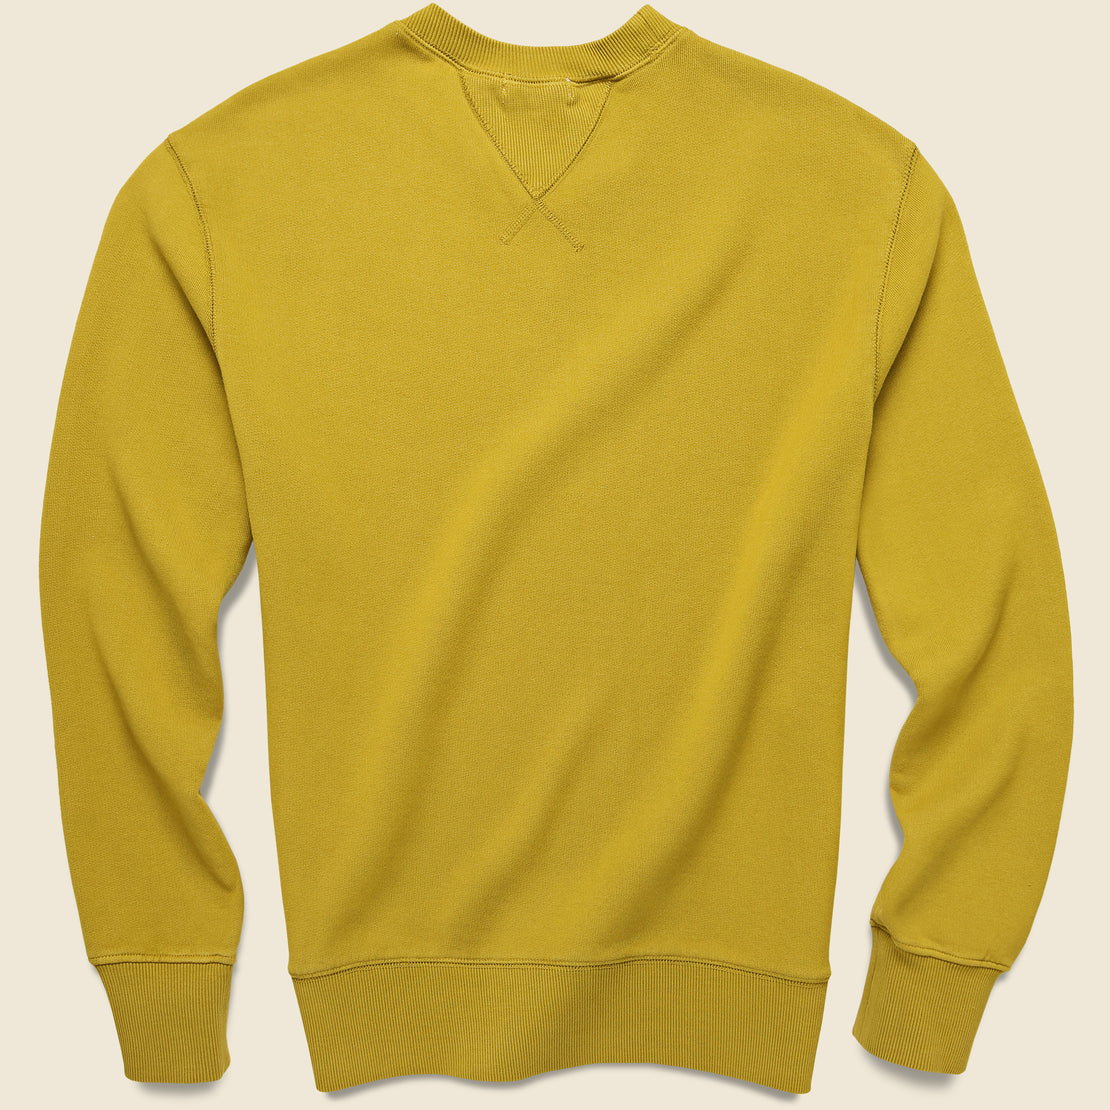 Crewneck Sweatshirt - Yellow Ochre - Alex Mill - STAG Provisions - Tops - Fleece / Sweatshirt